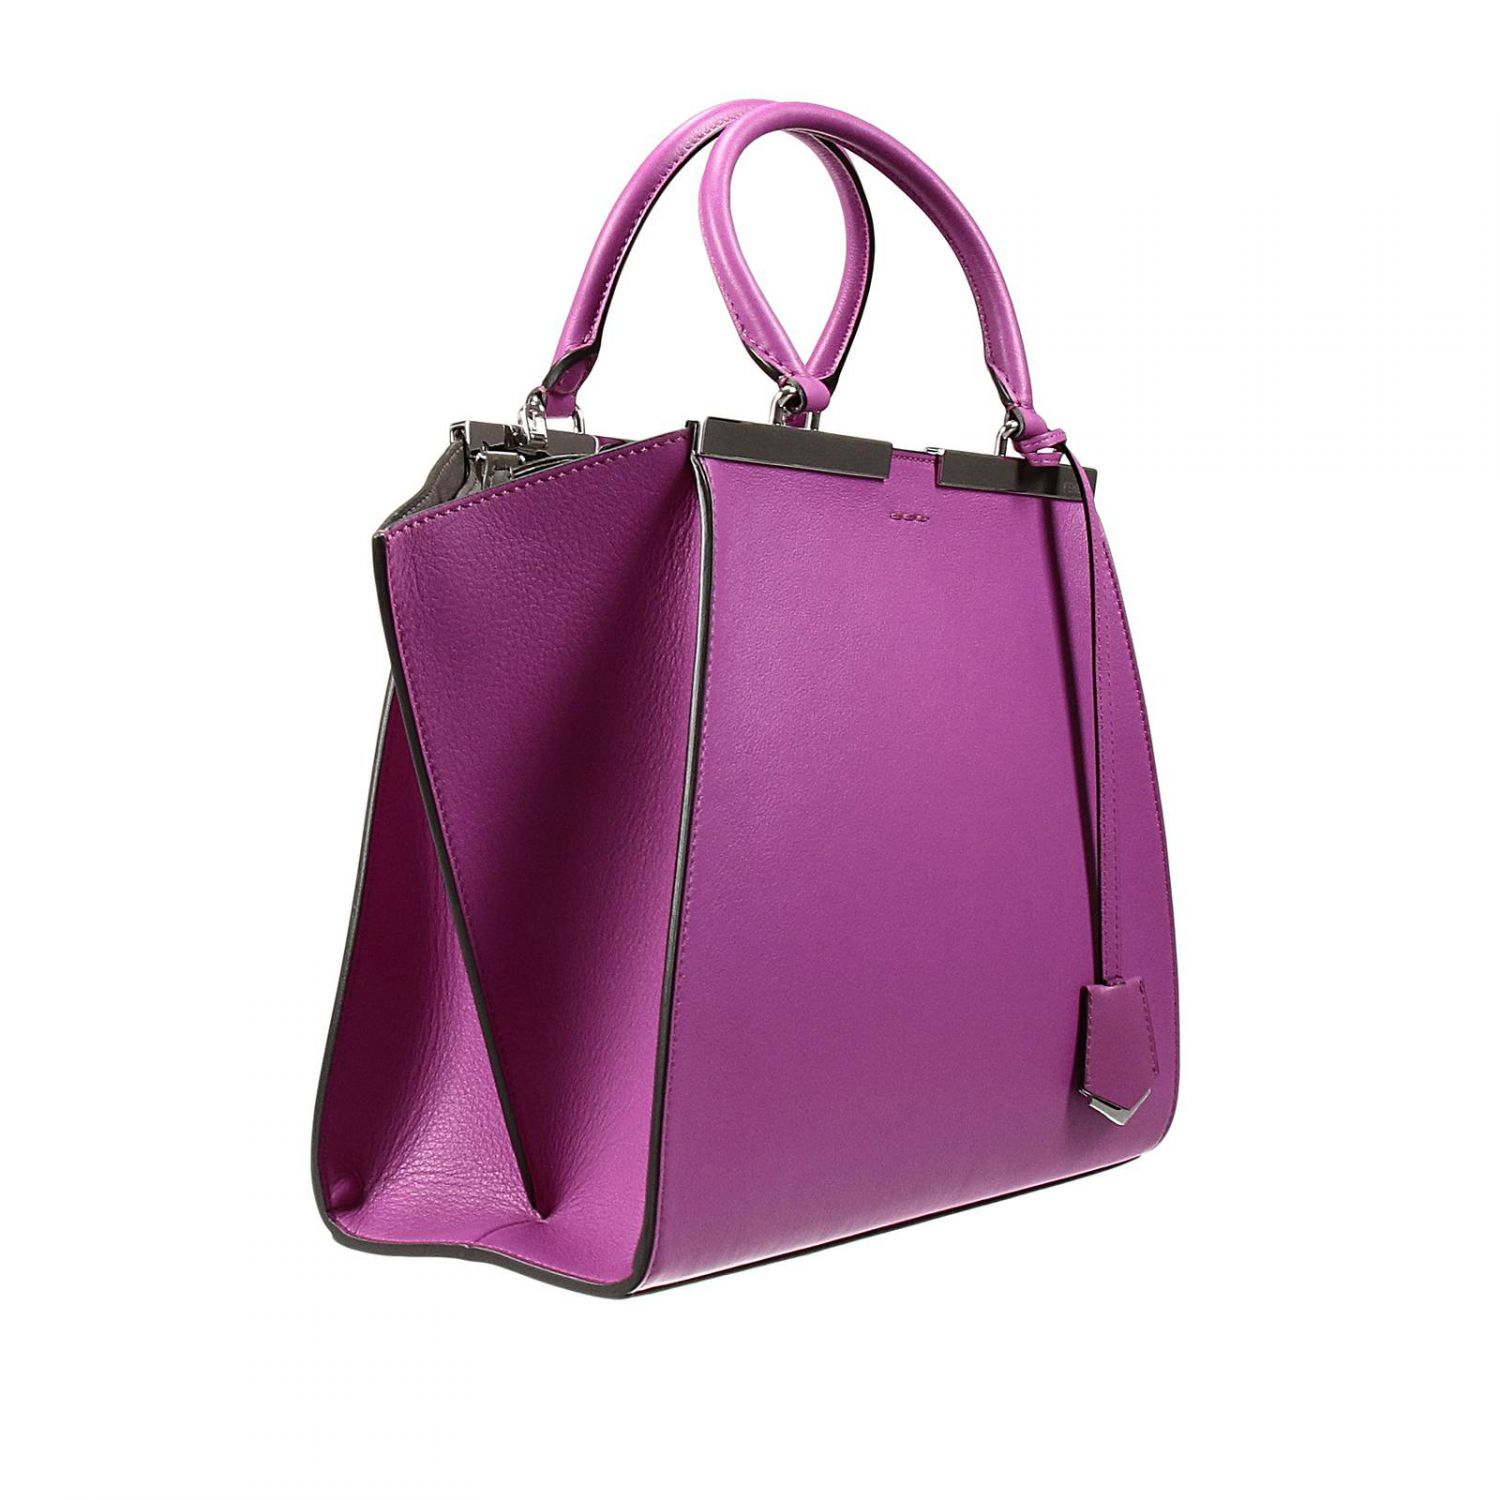 Lyst - Fendi Handbag in Purple